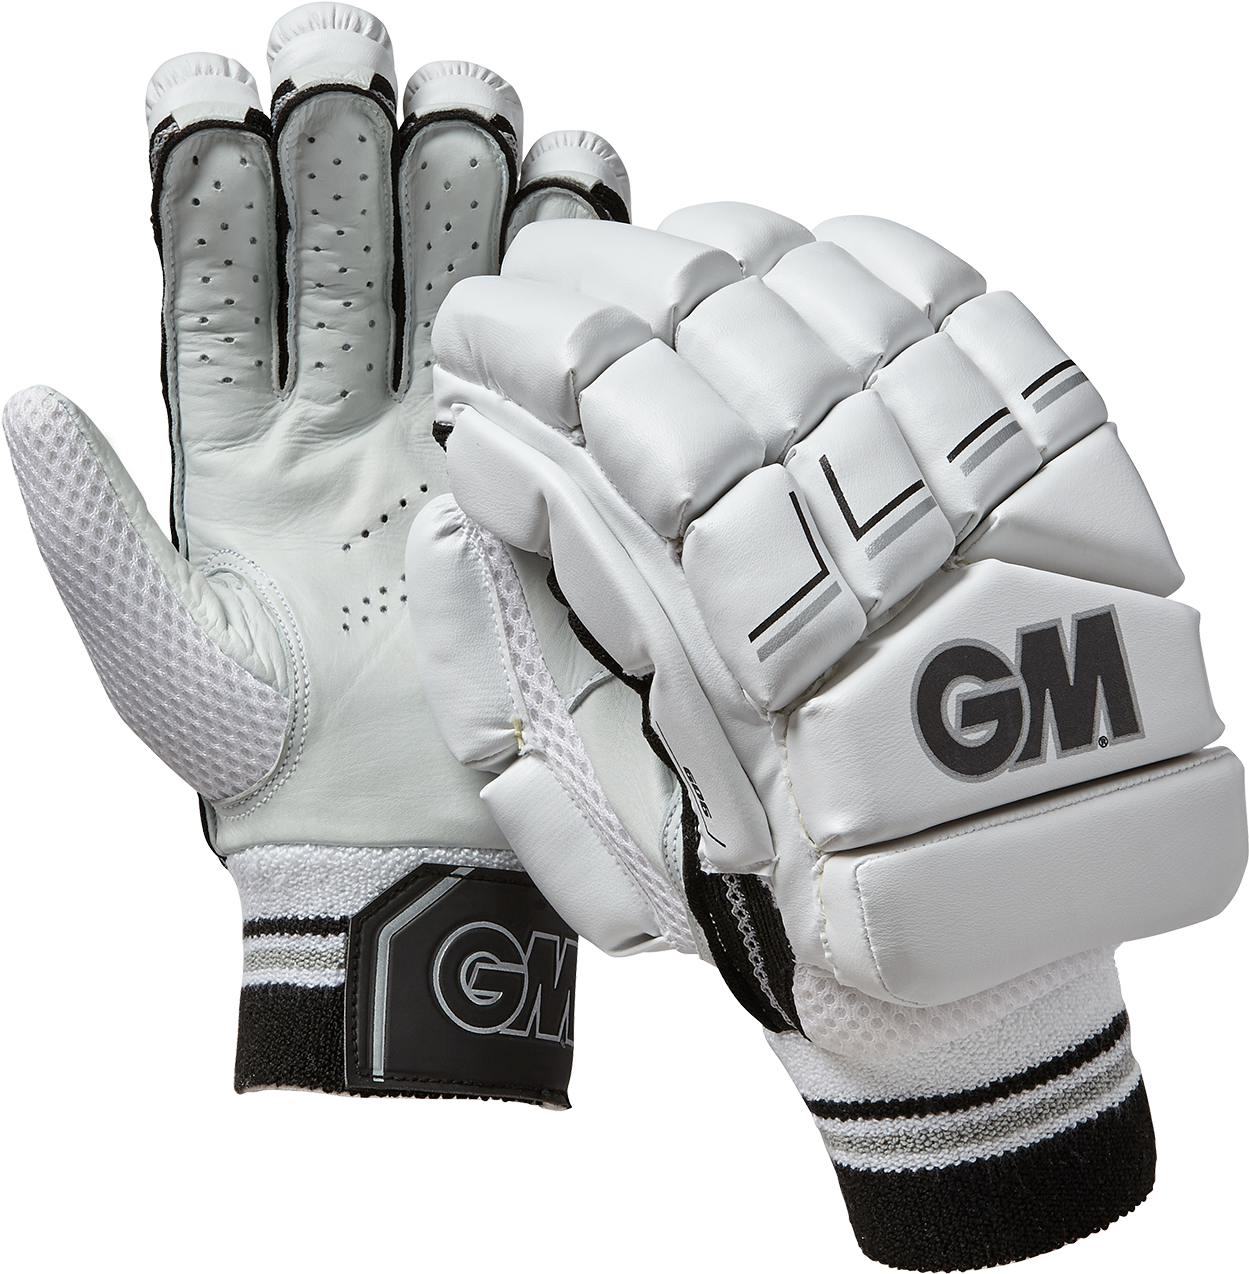 606 Batting Glove - Gm Original Batting Gloves (1590x1578), Png Download